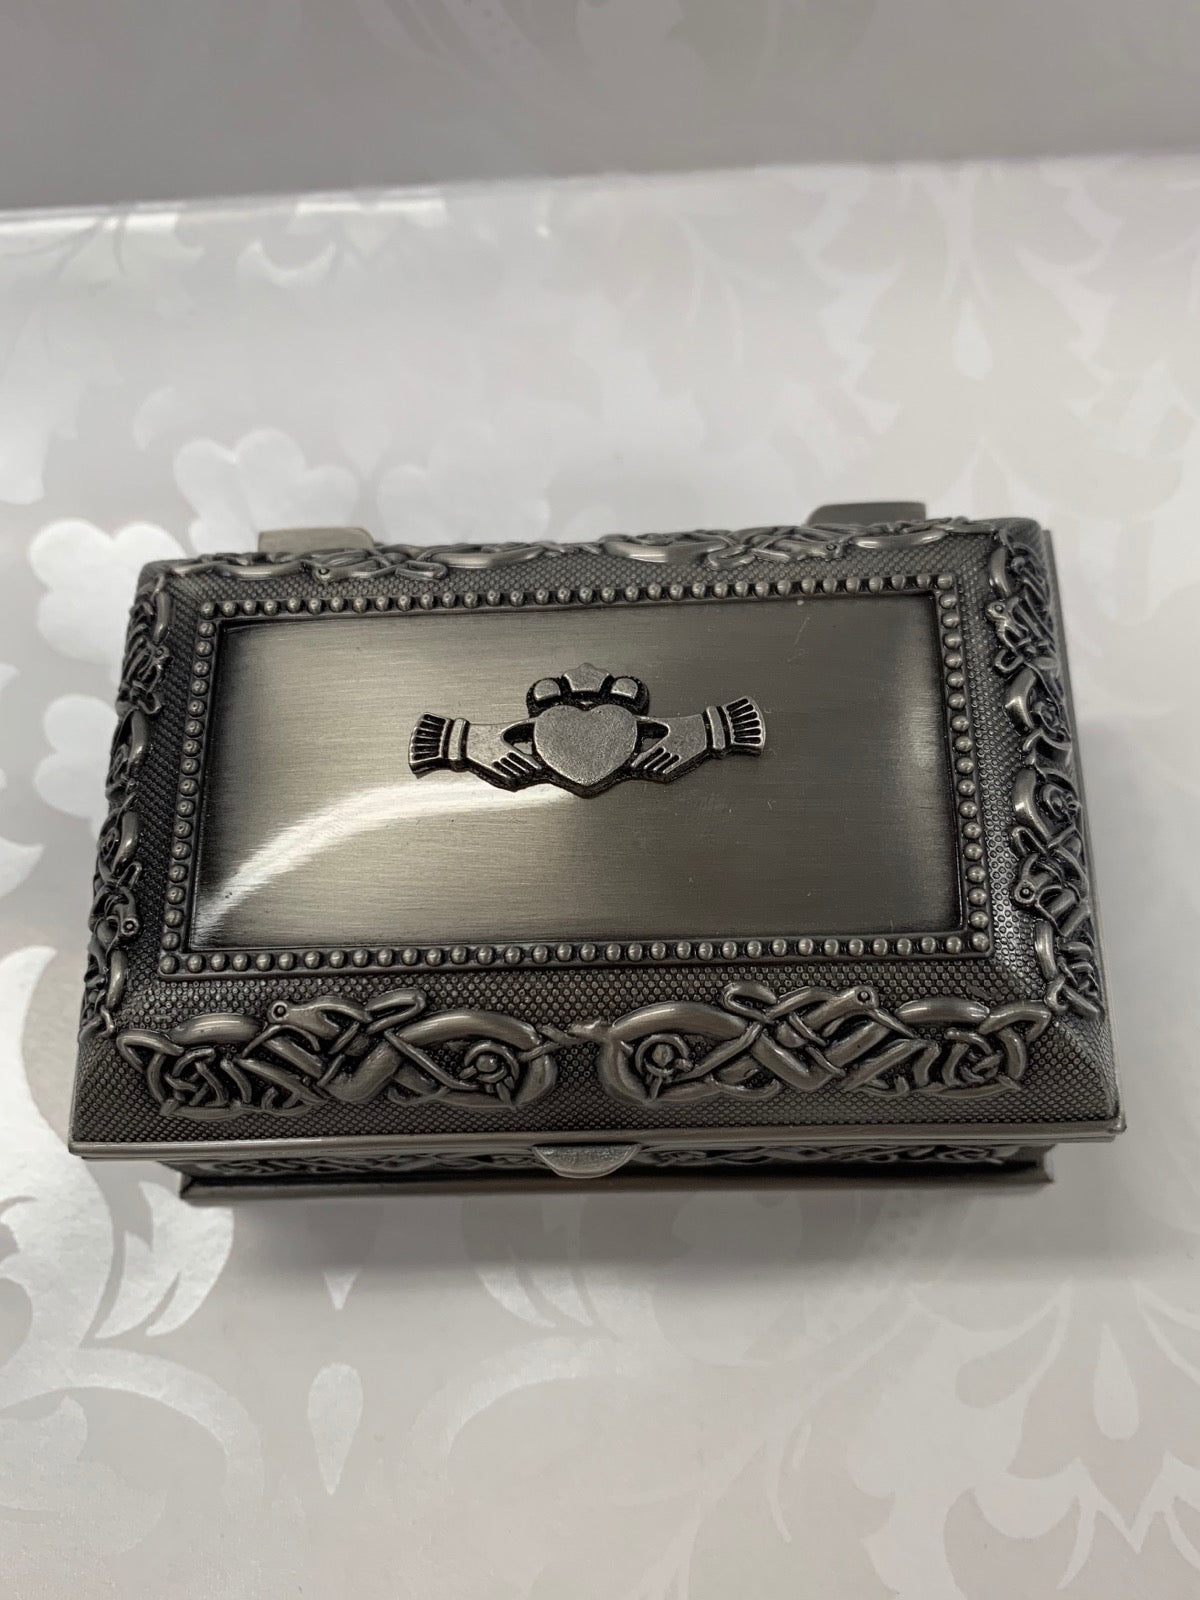 Mullingar Pewter Jewelry Box - Small Md17s